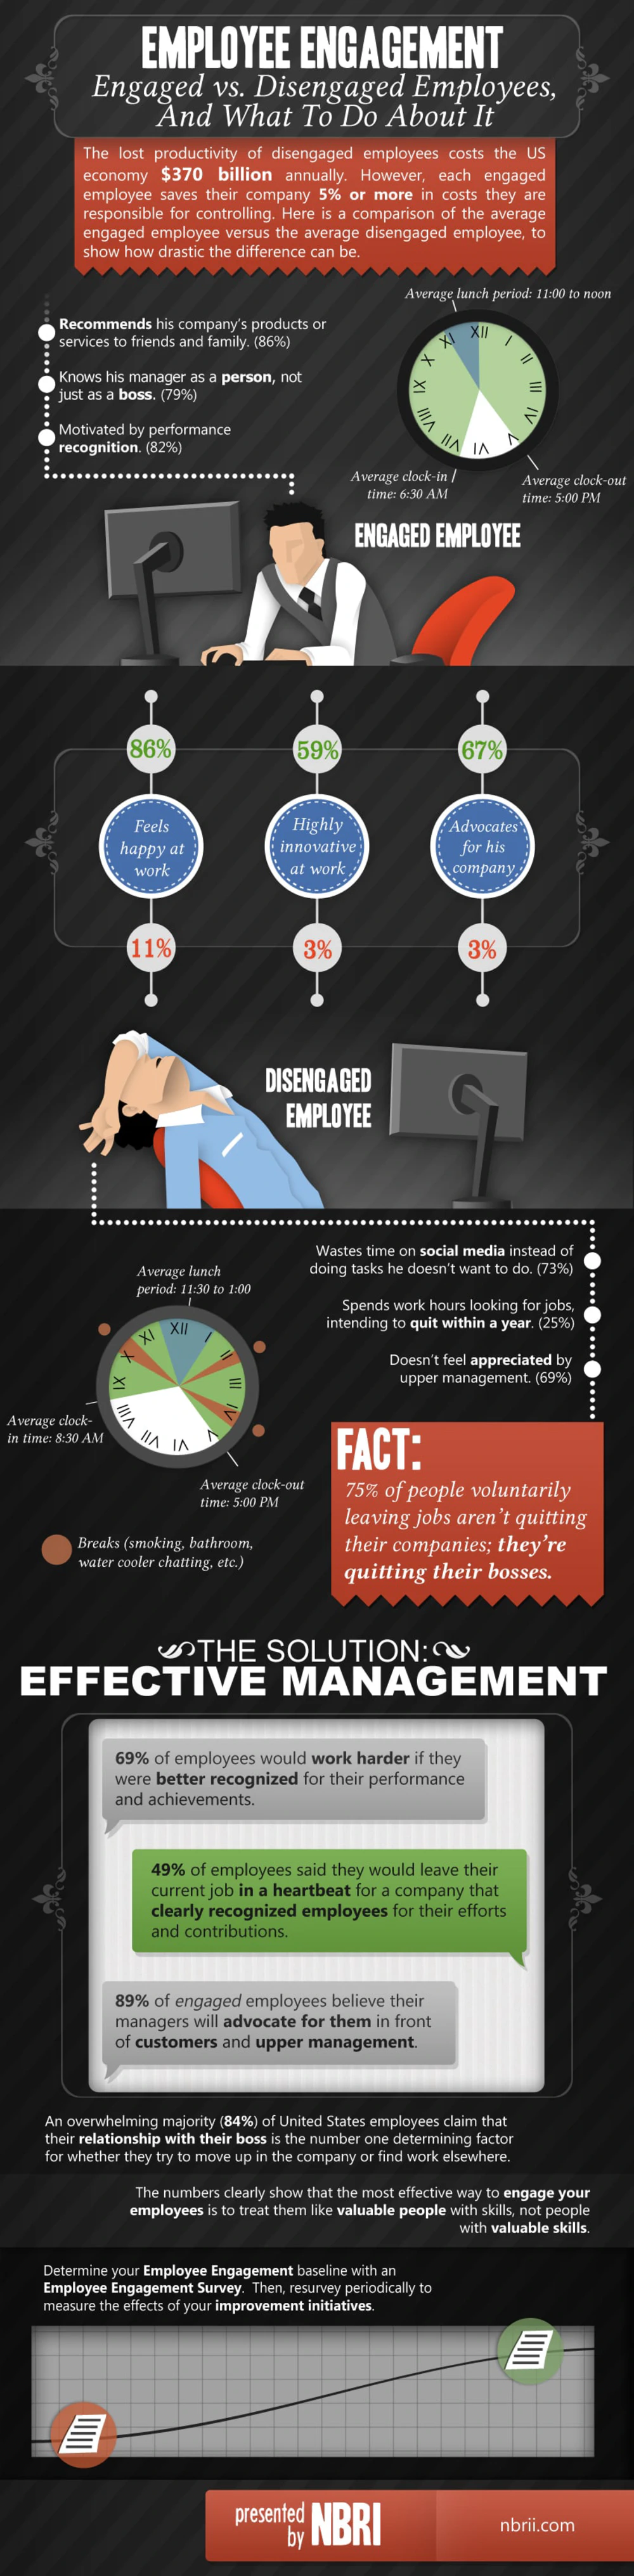 Employee Engagement infographic